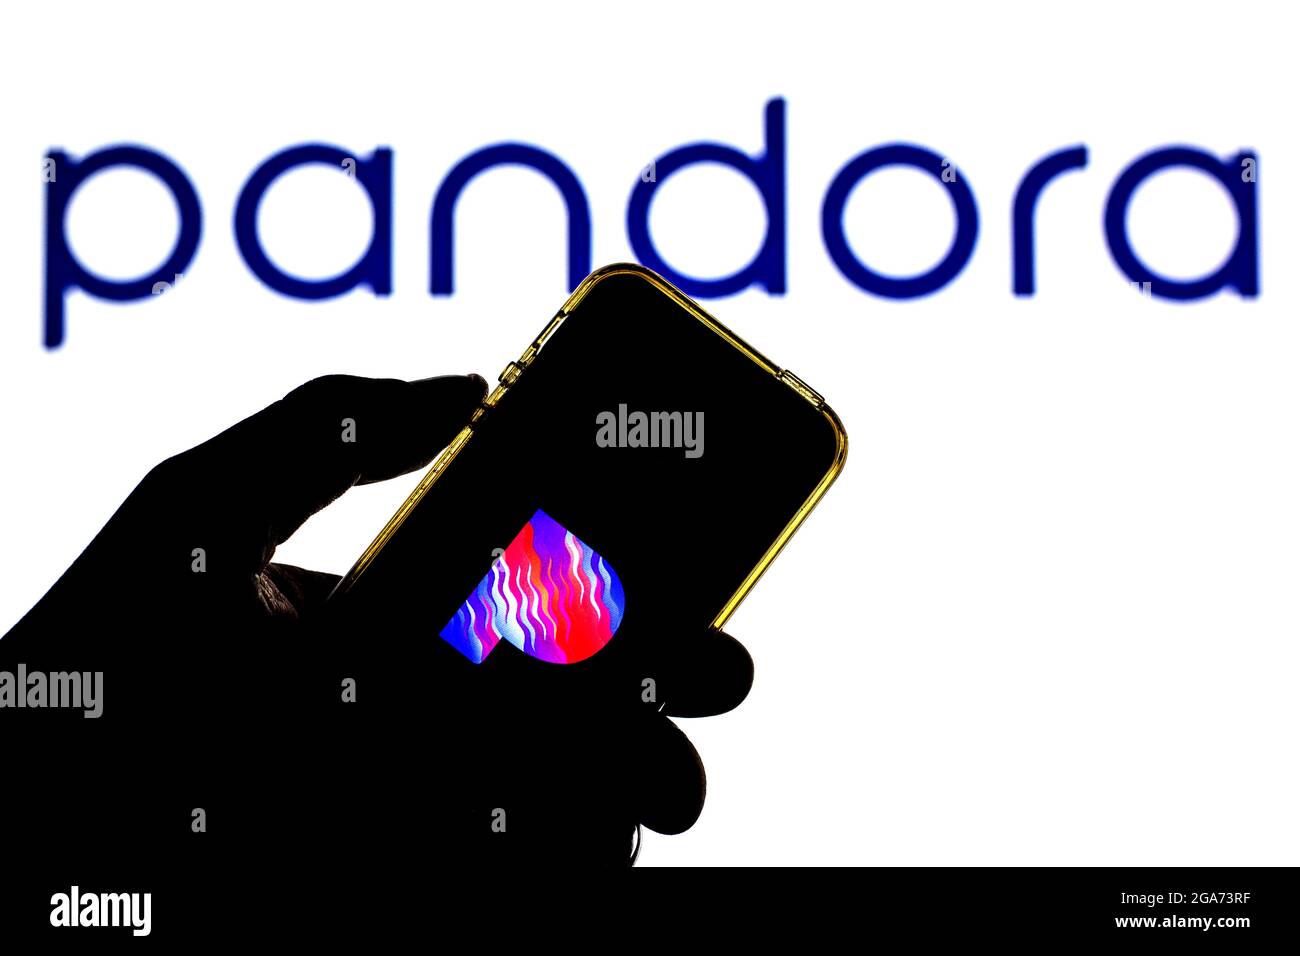 Pandora radio hi-res stock photography and images - Alamy